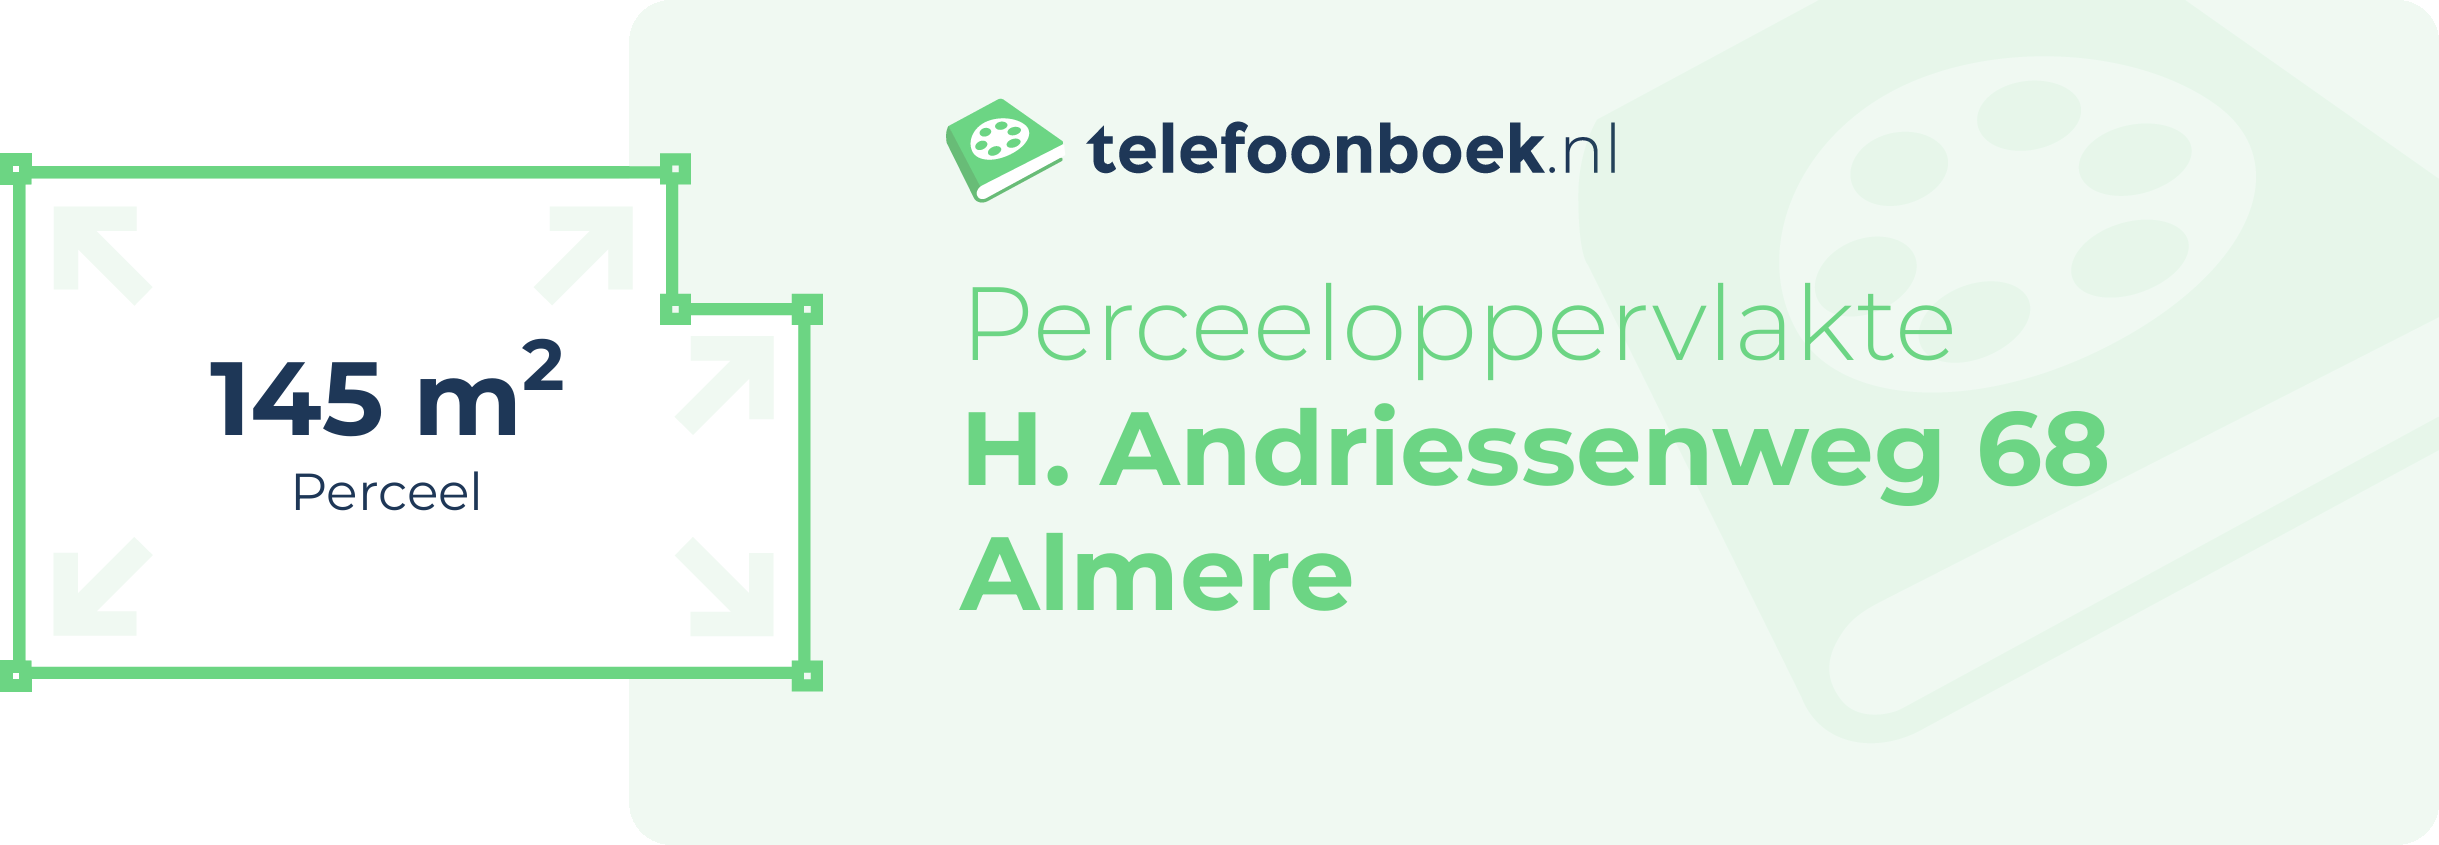 Perceeloppervlakte H. Andriessenweg 68 Almere